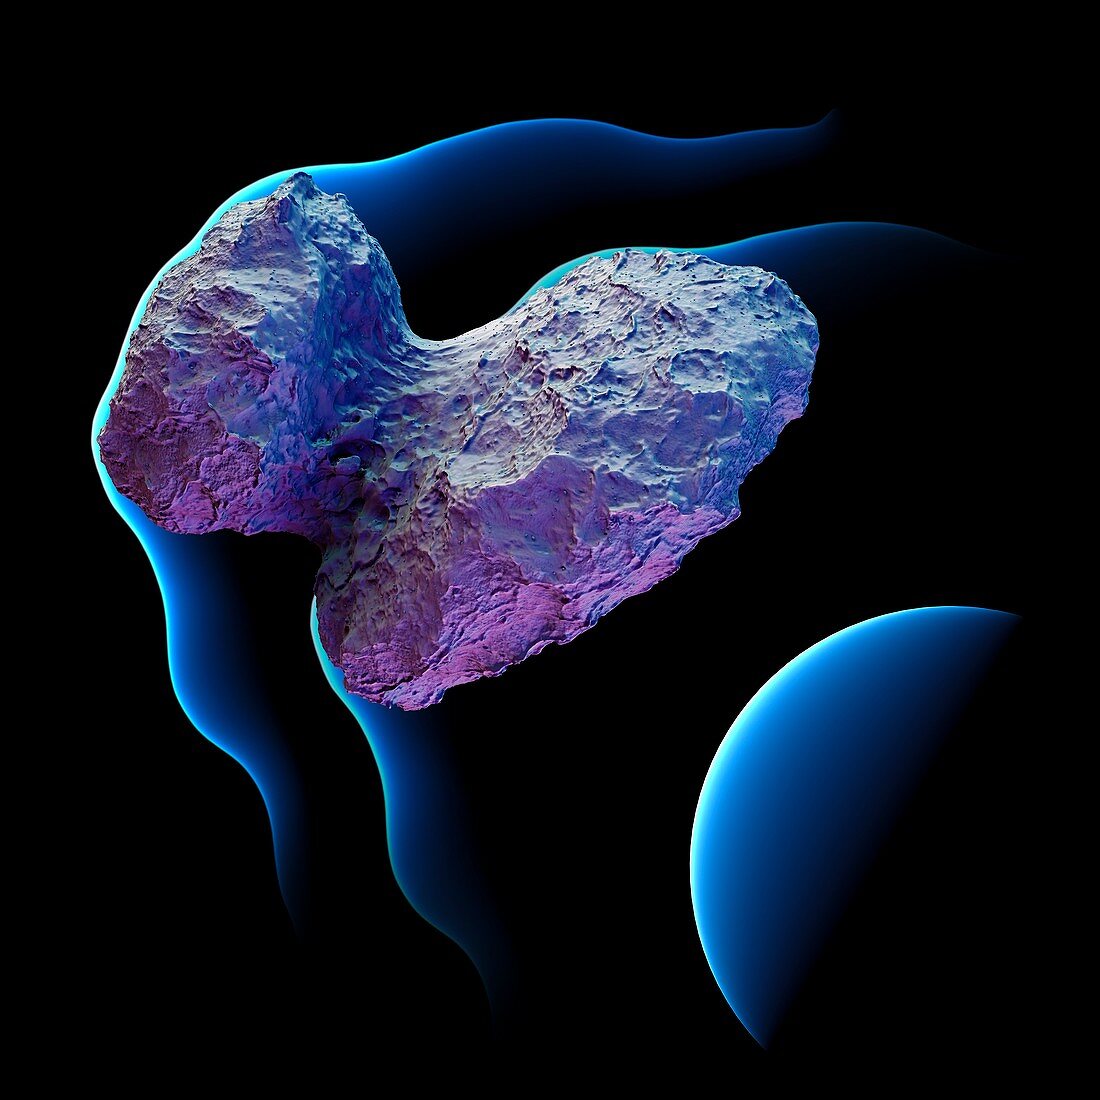 Comet Churyumov-Gerasimenko,illustration